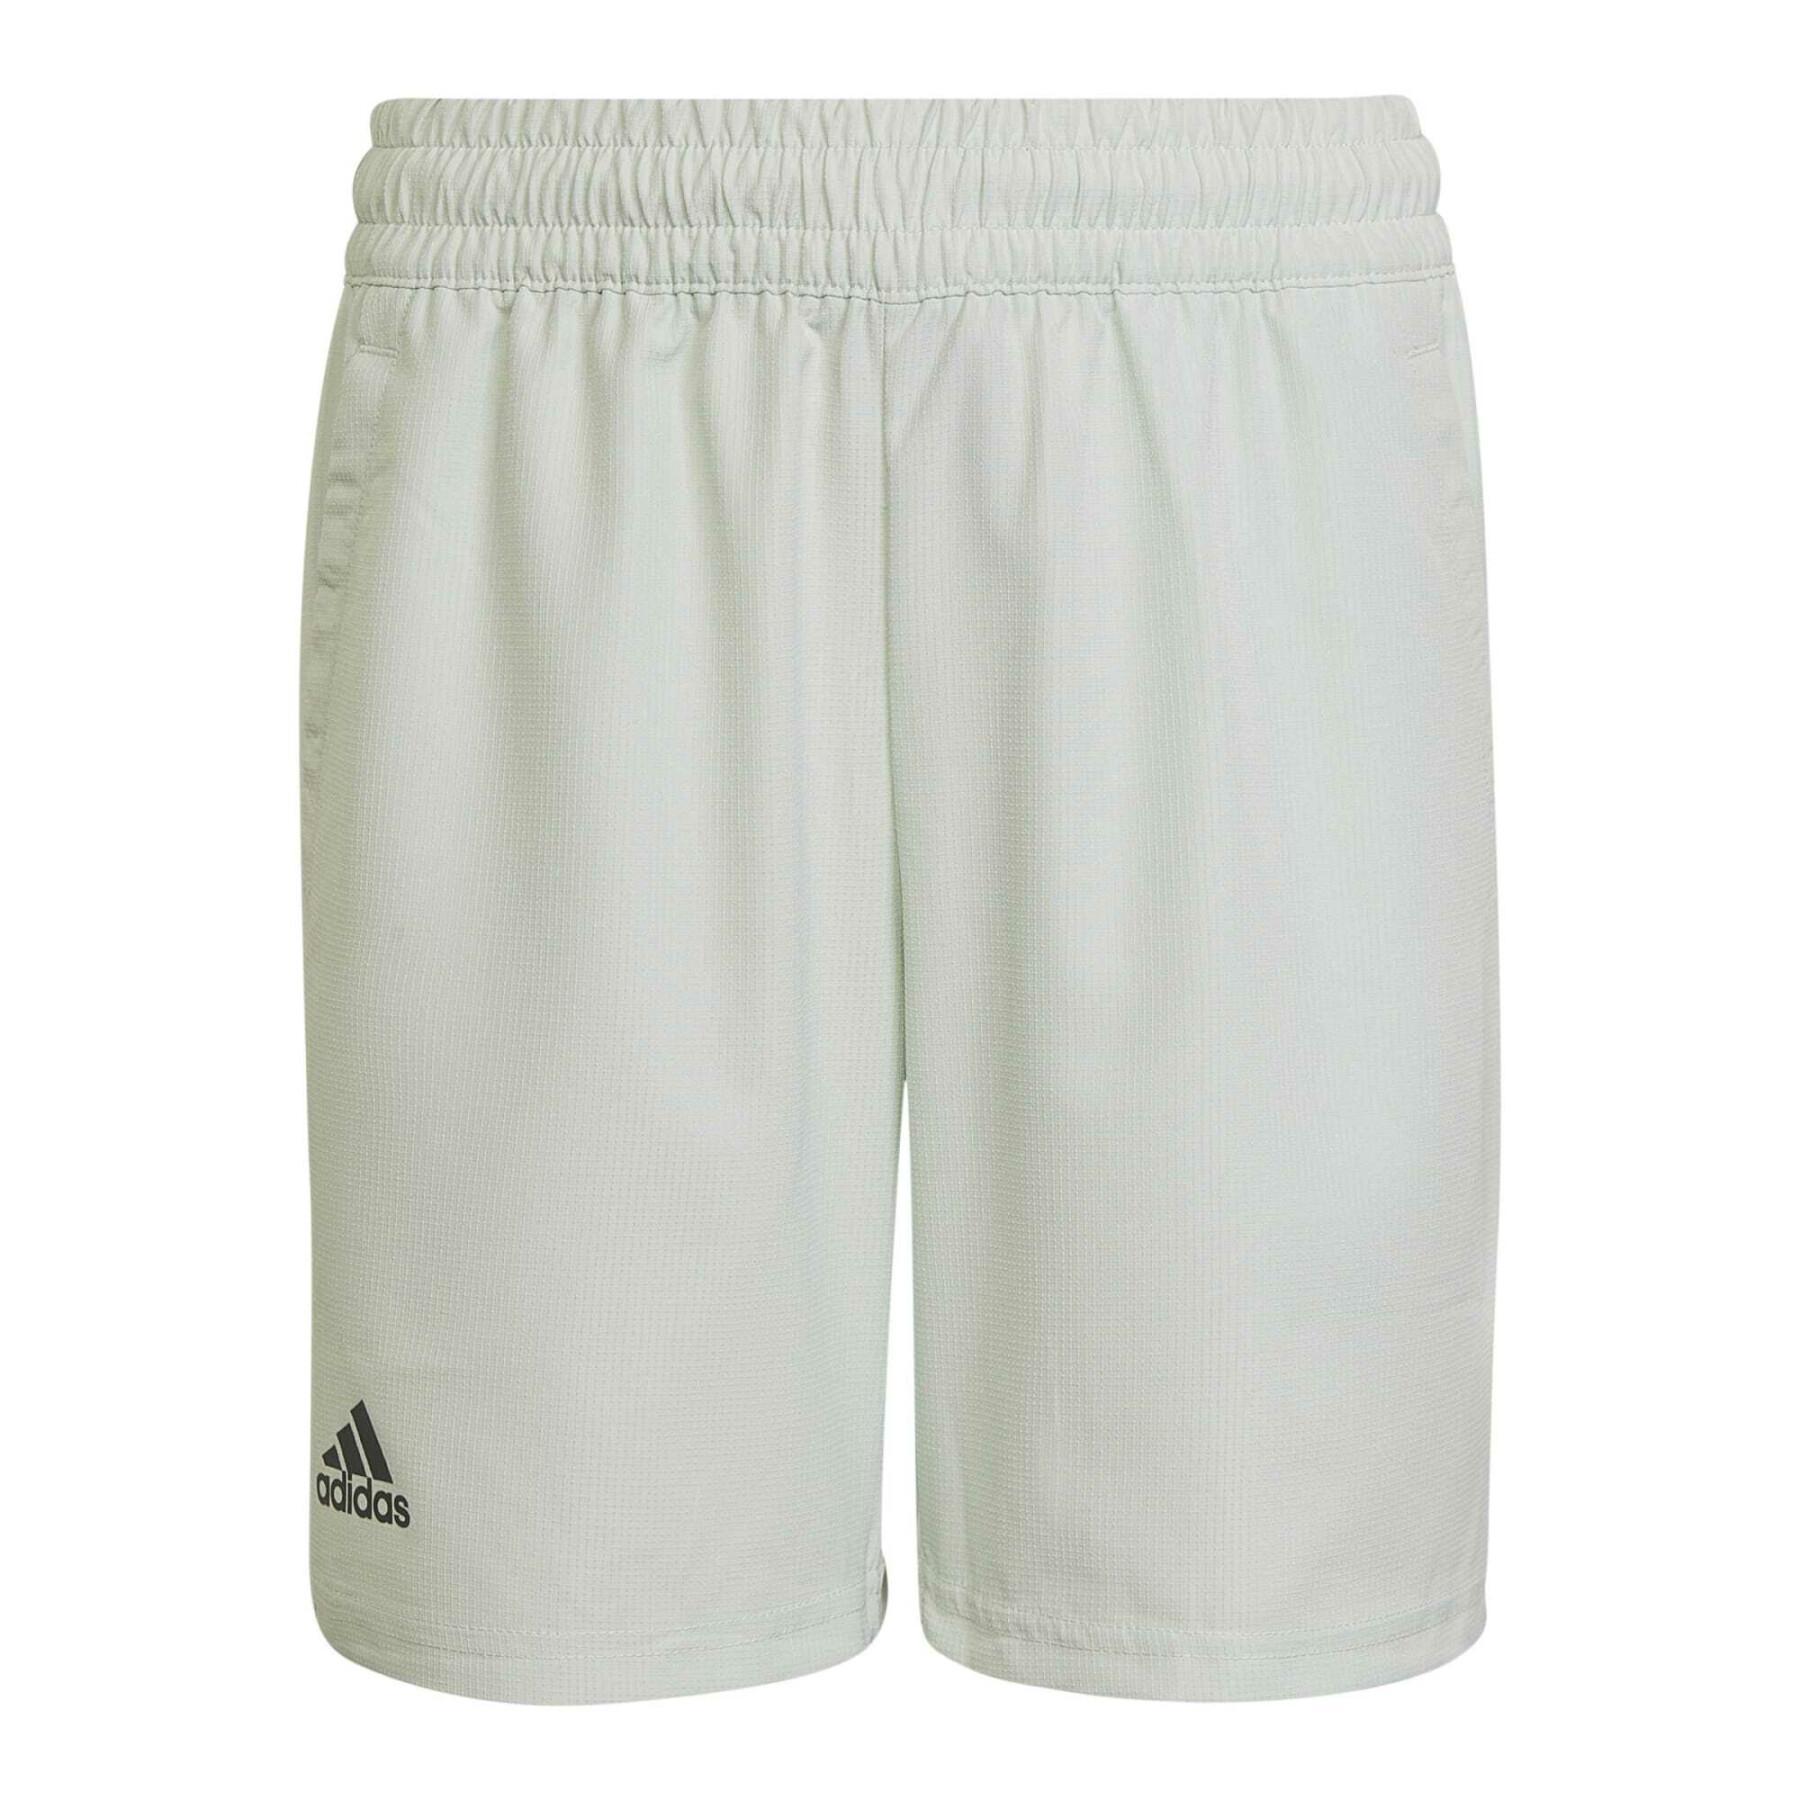 Tennis club shorts for kids adidas